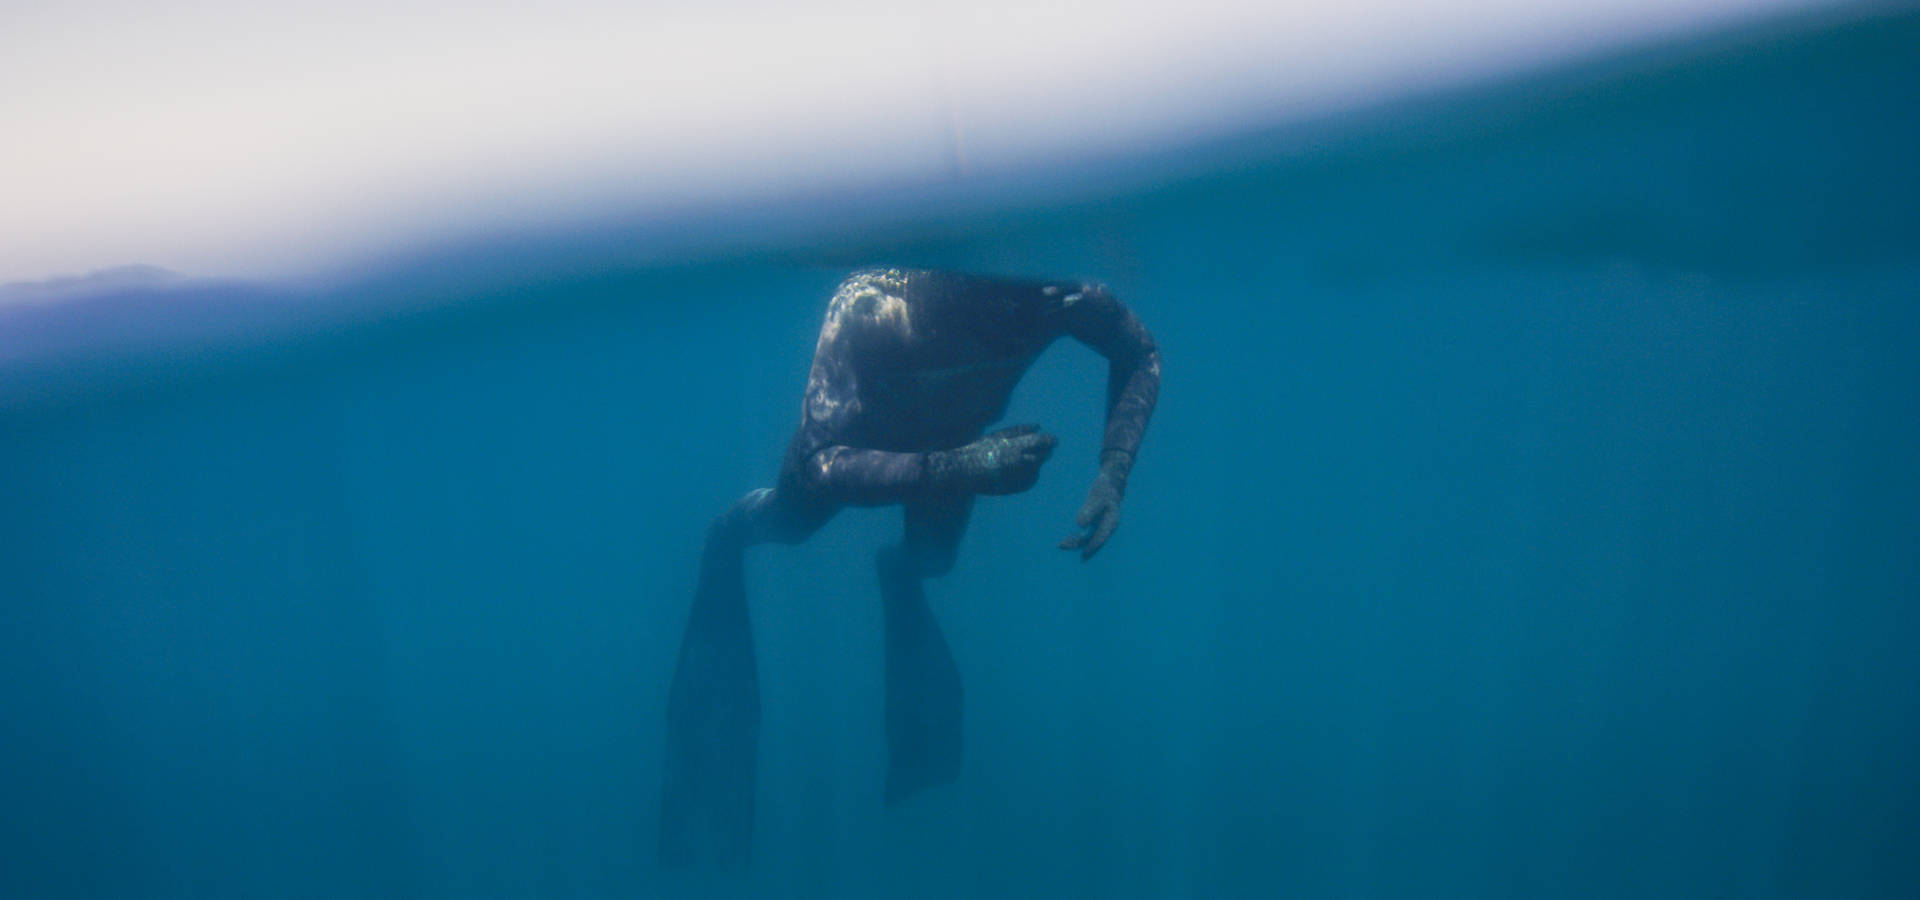 Underwater Snorkeling Image Wallpaper